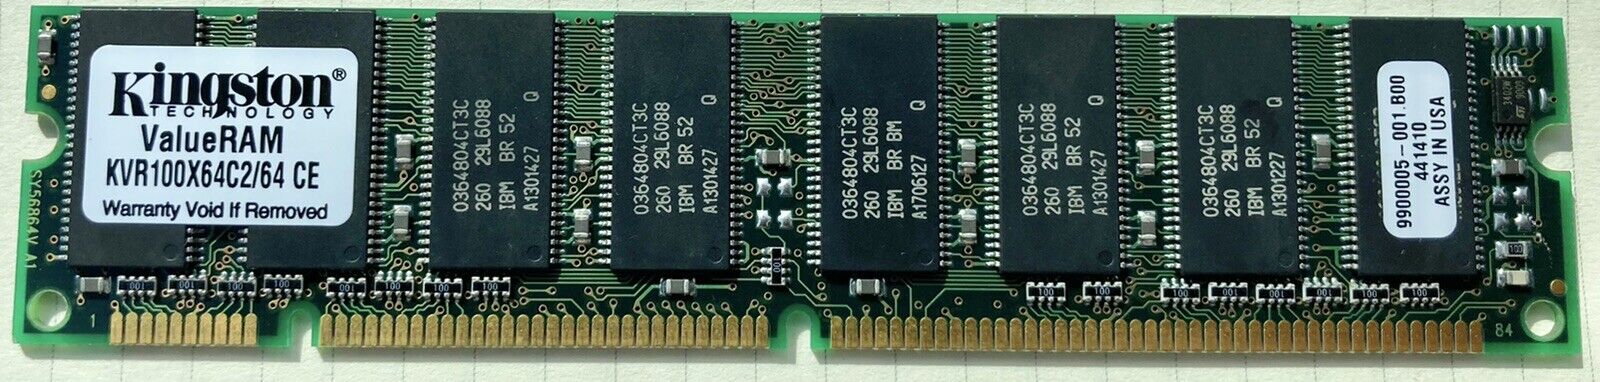 Kingston Technology KVR100X64C2/64 CE Internal Memory Card 64MB